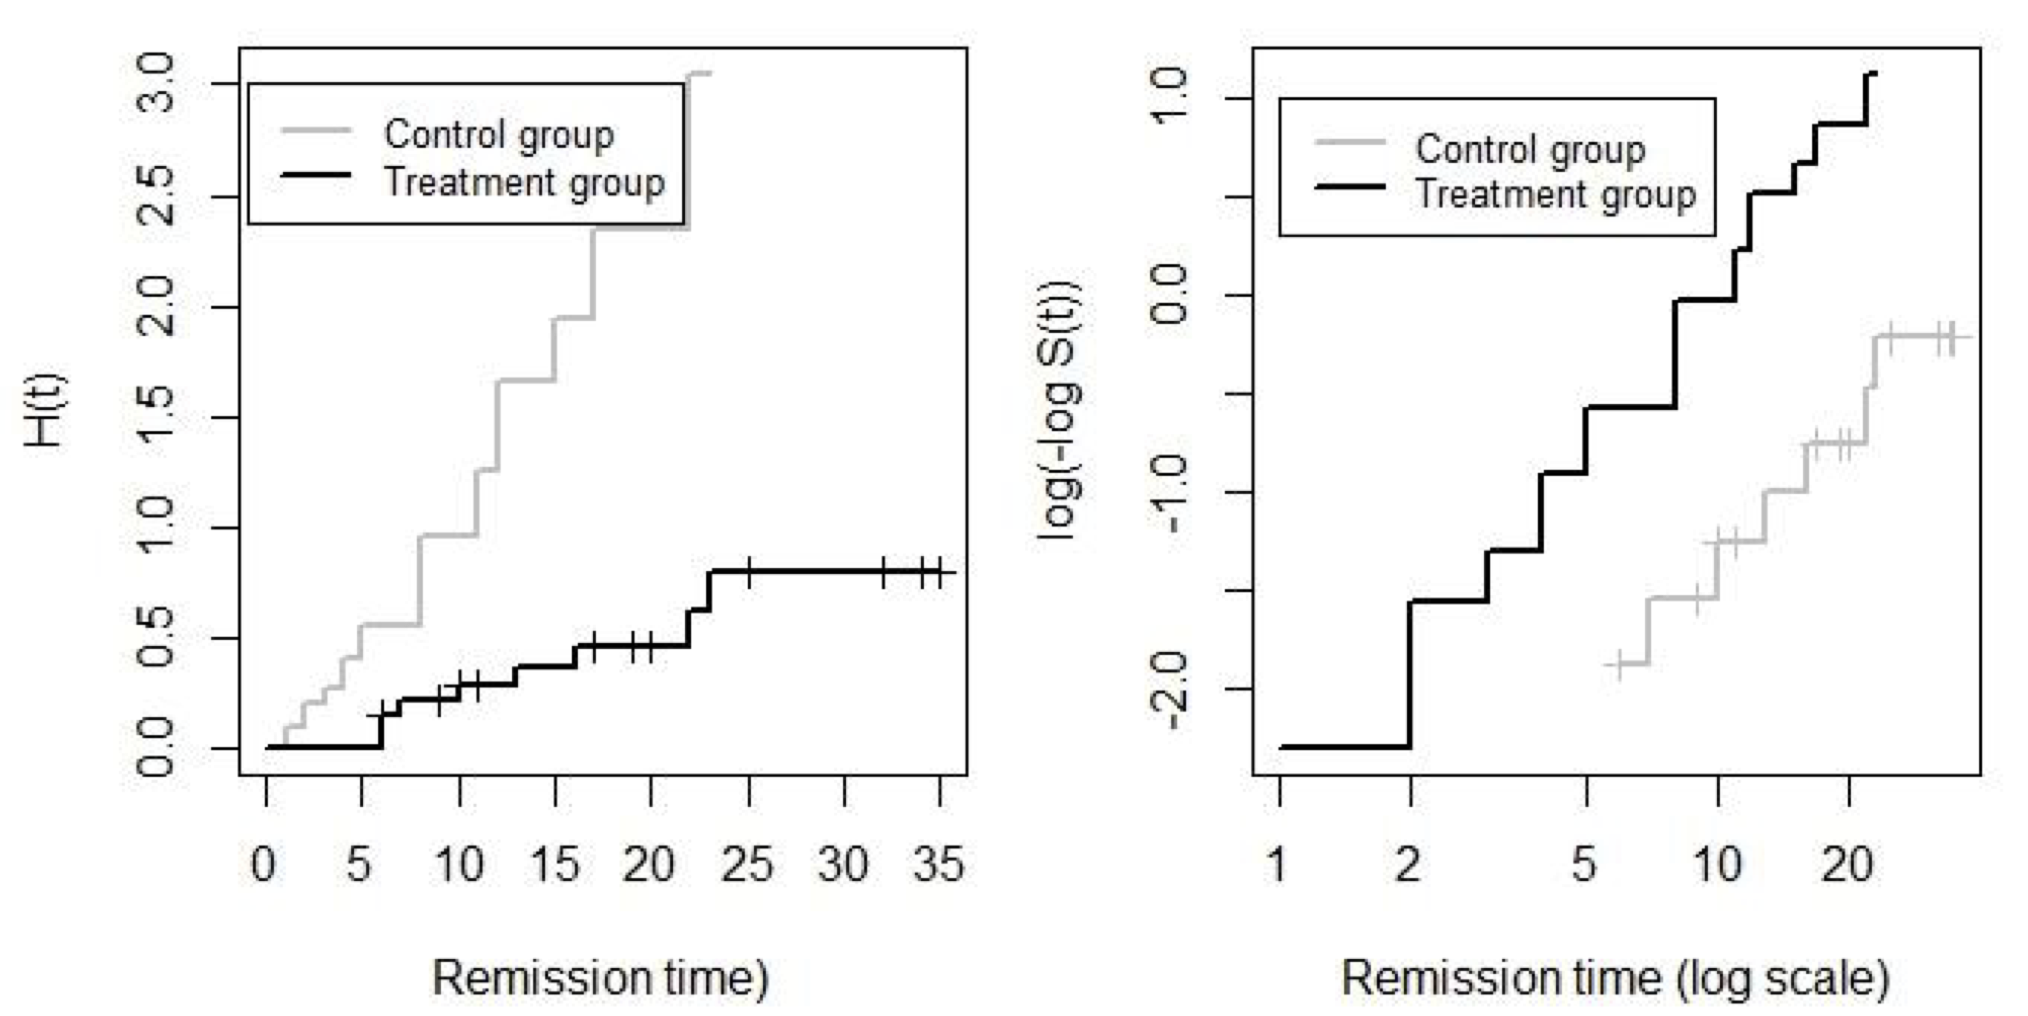 Leukaemia patient data: Kaplan-Meier plots of the cumulative hazard (left) and the log cumulative hazard (right) in treatment and controls groups.